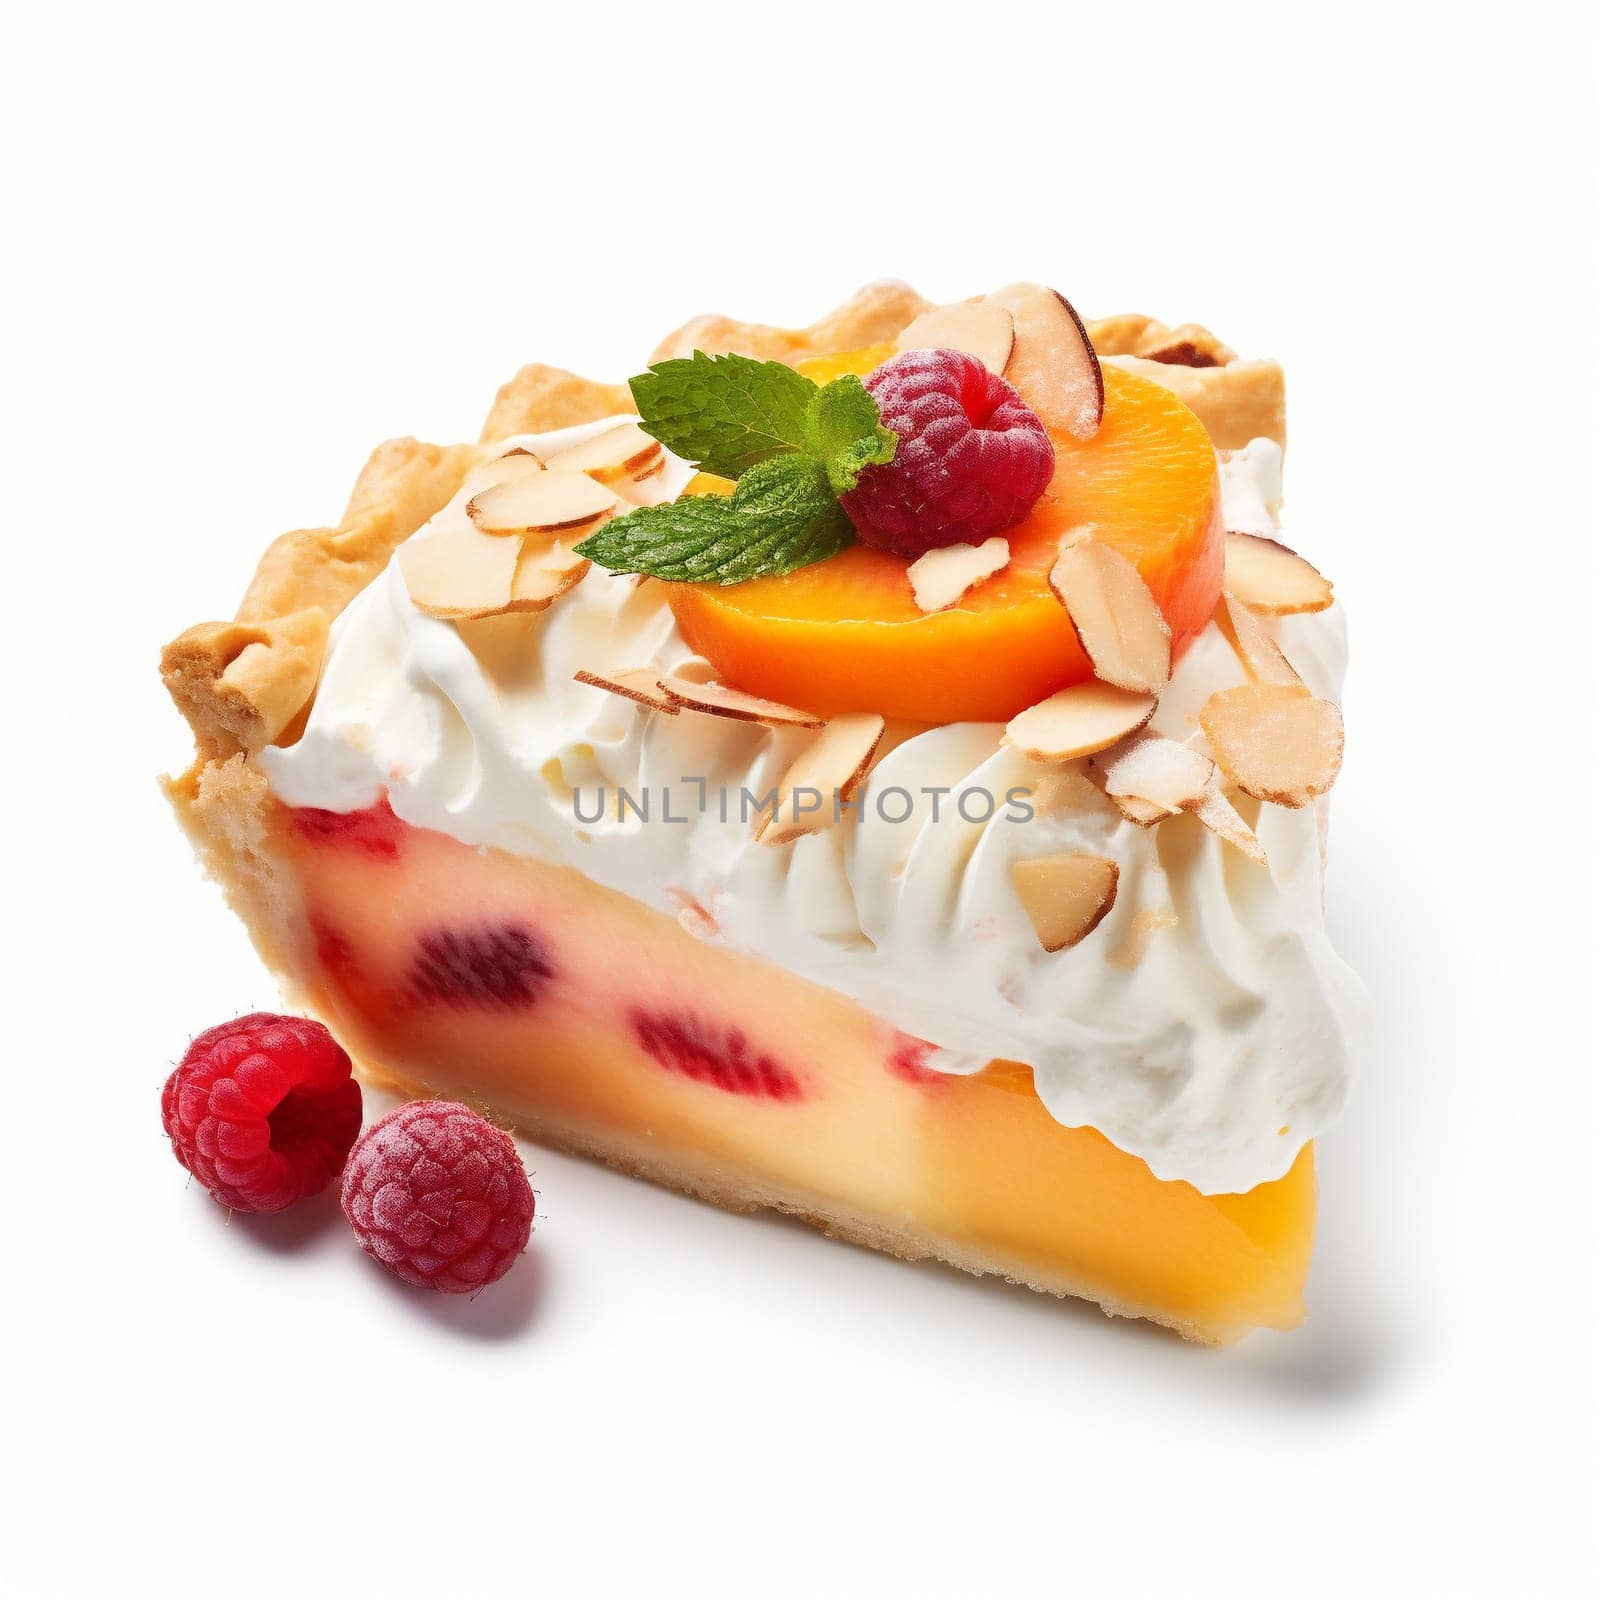 Piece of Tasty Fruit Pie on White Background. Fruit Tart with Fresh Fruits, Berries, Cream, Raspberries, Almonds.